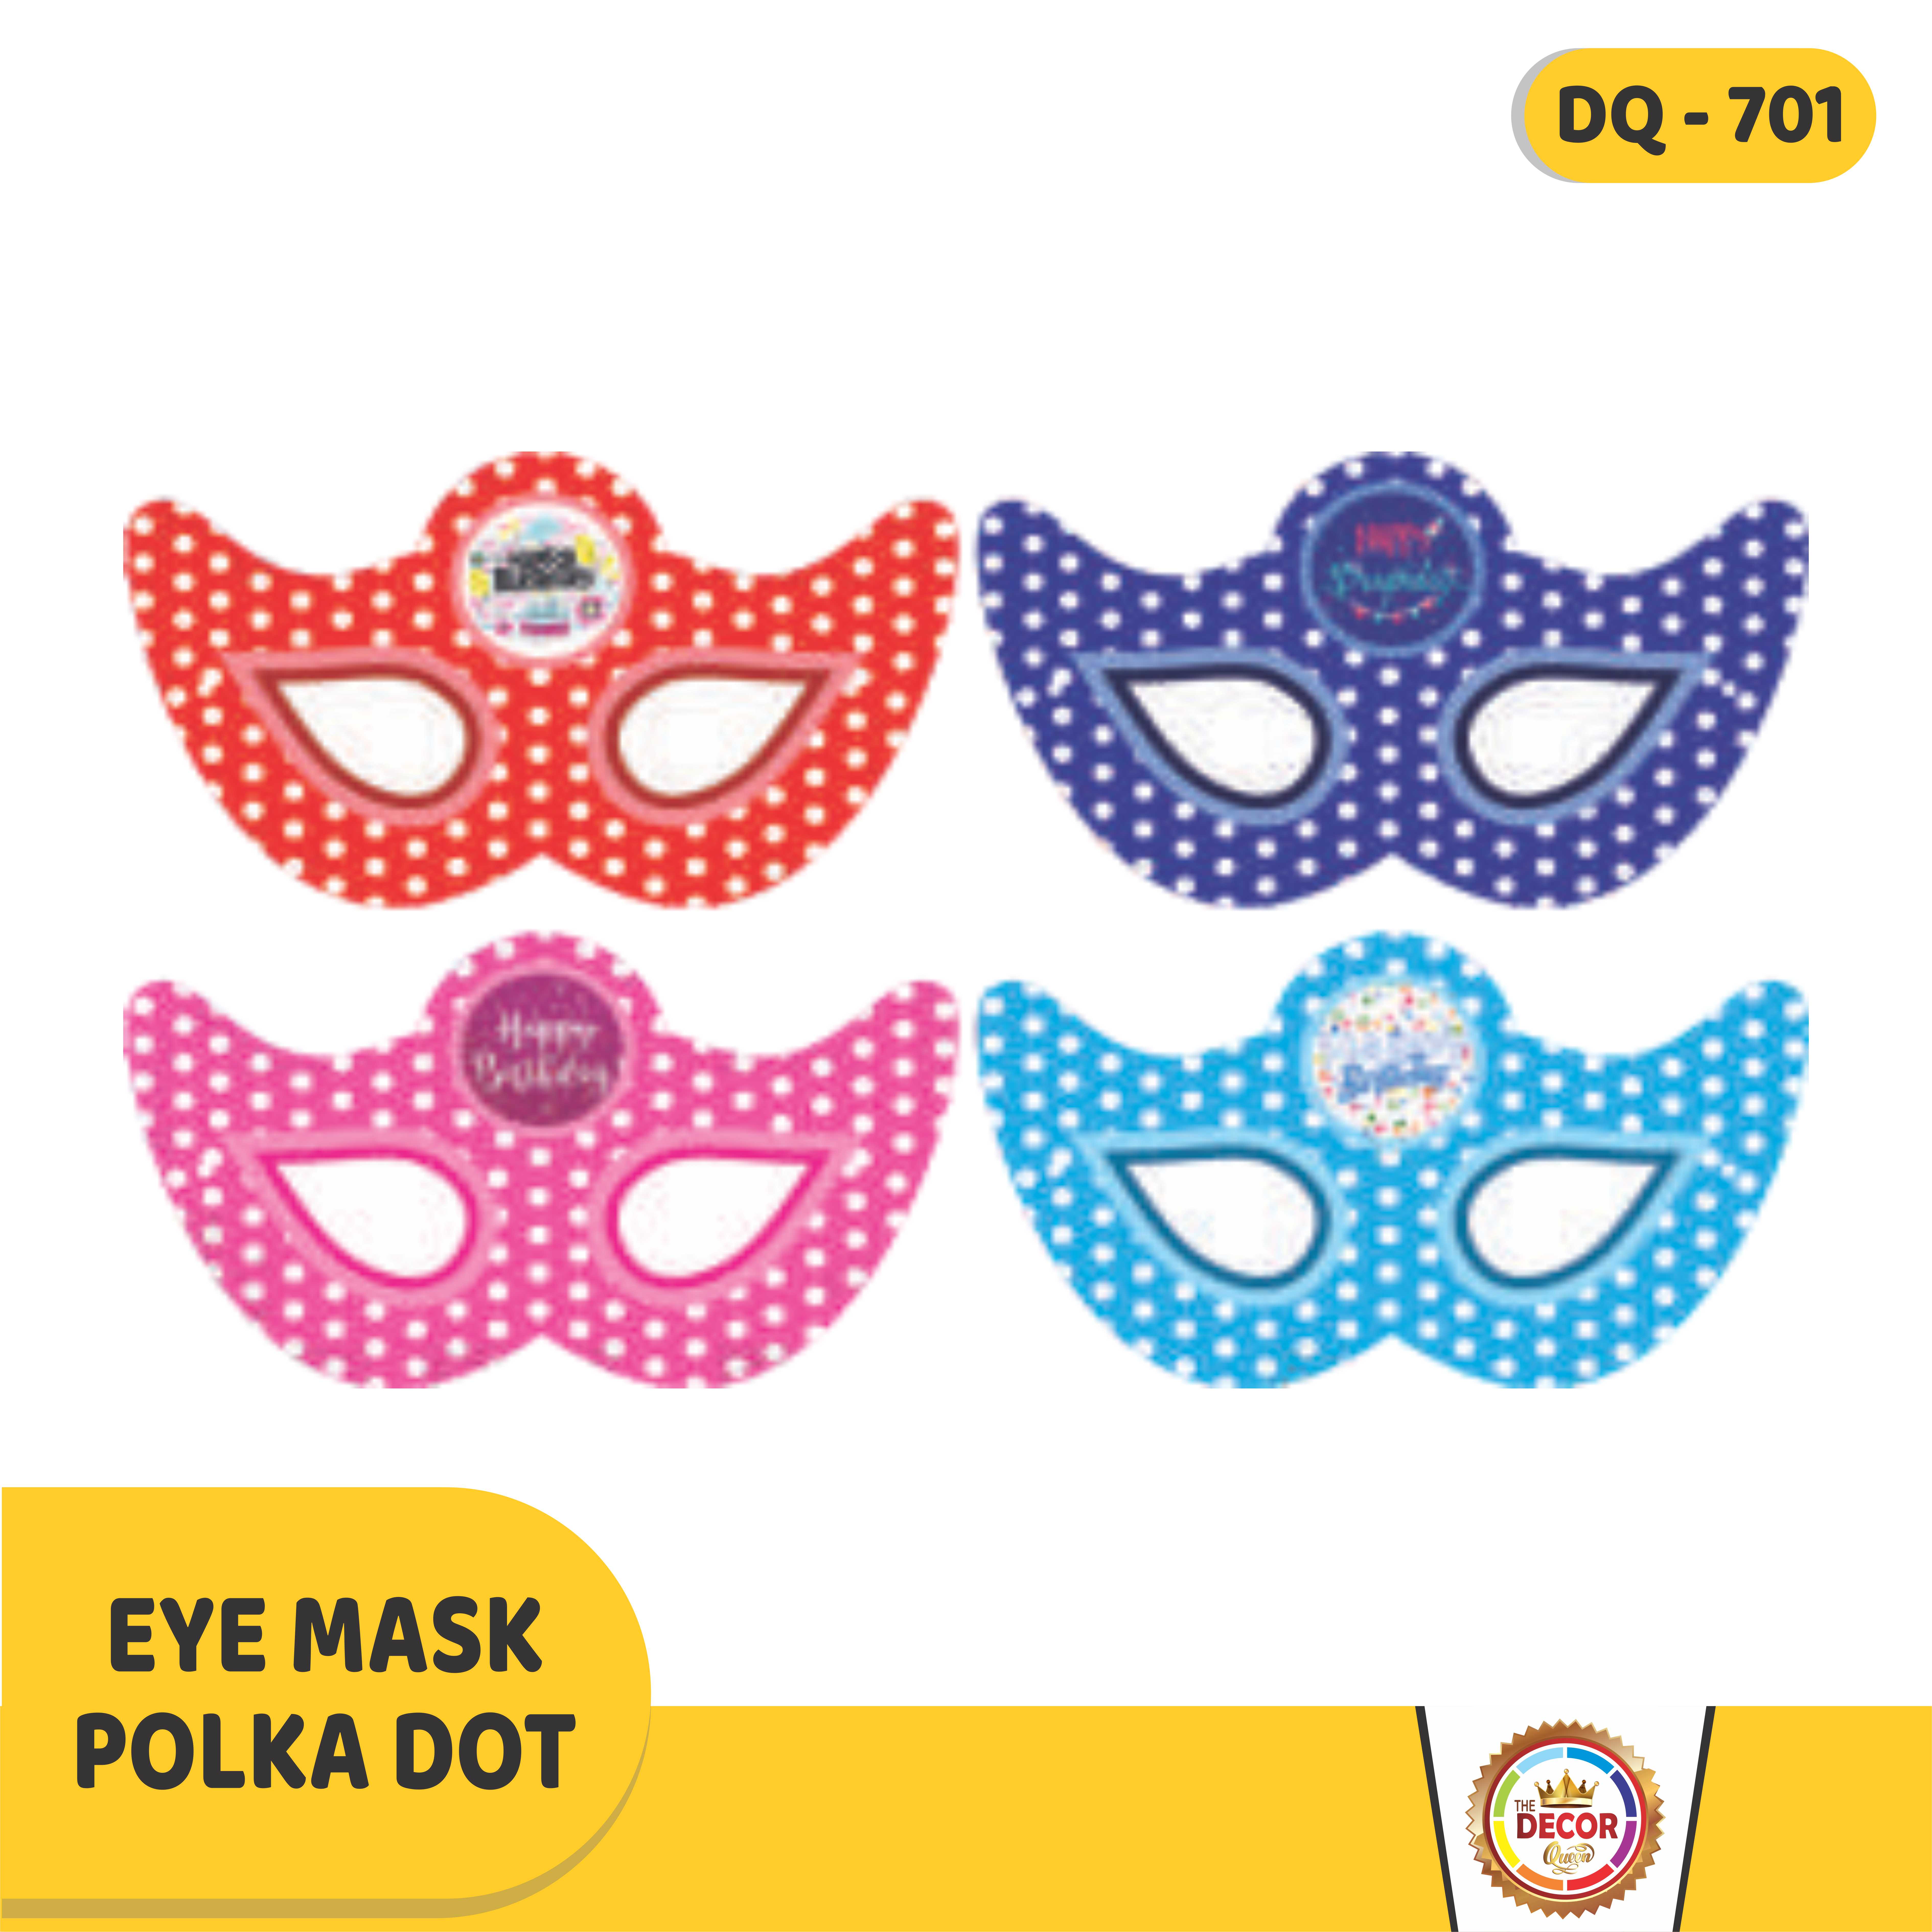 EYE MASK POLKA DOT|Mask|Eye Mask